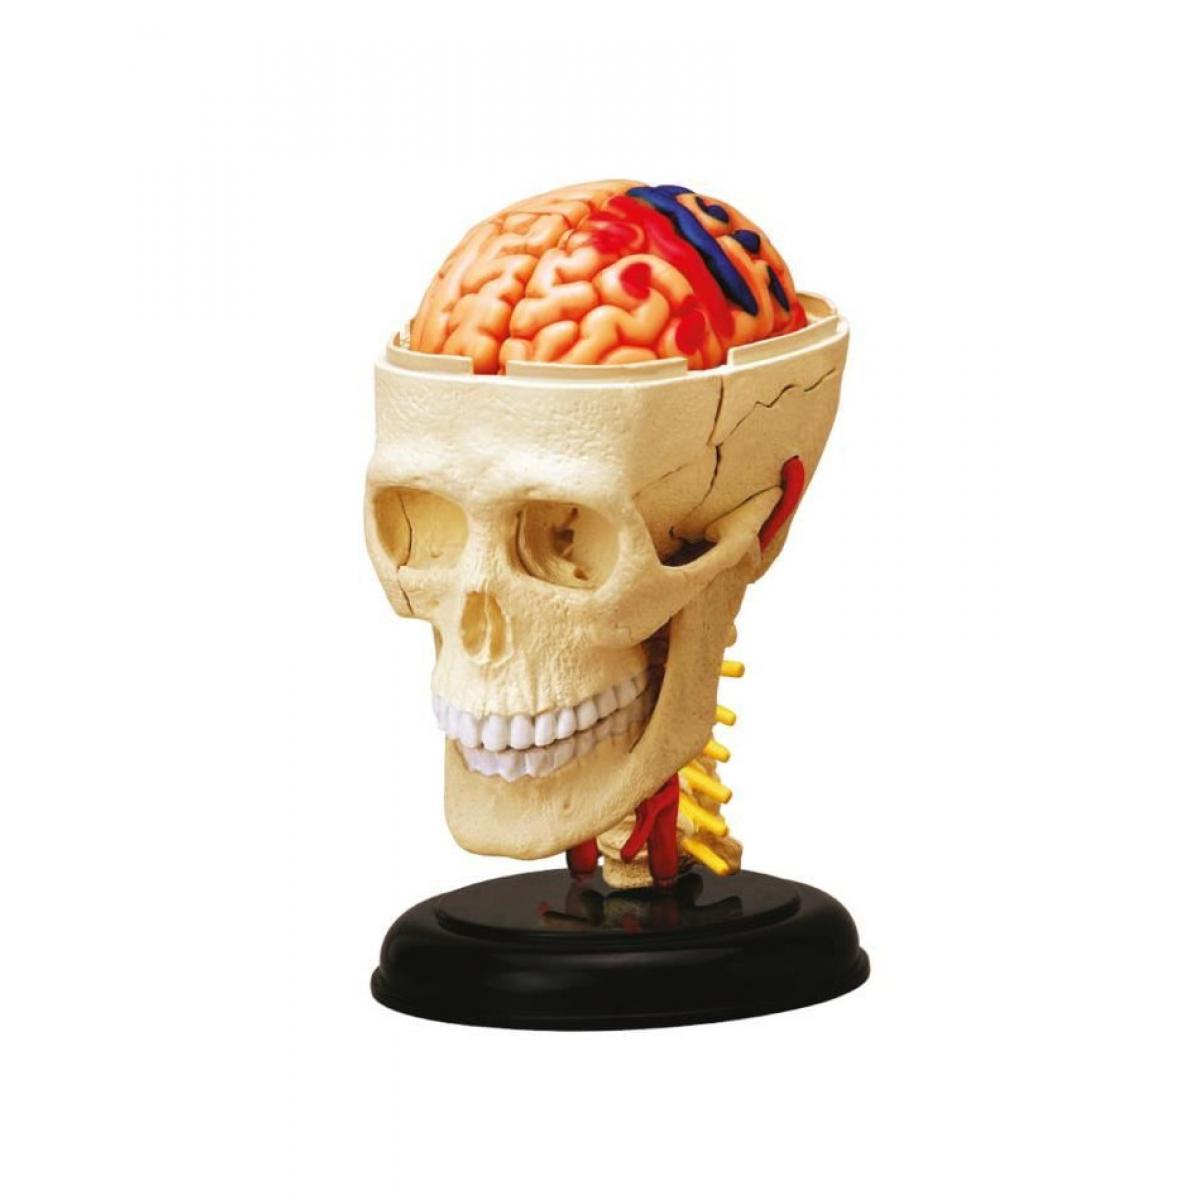 Mgm - MGM - Explora - Anatomie crâne et cerveau - Expérience anatomie - Casse-tête